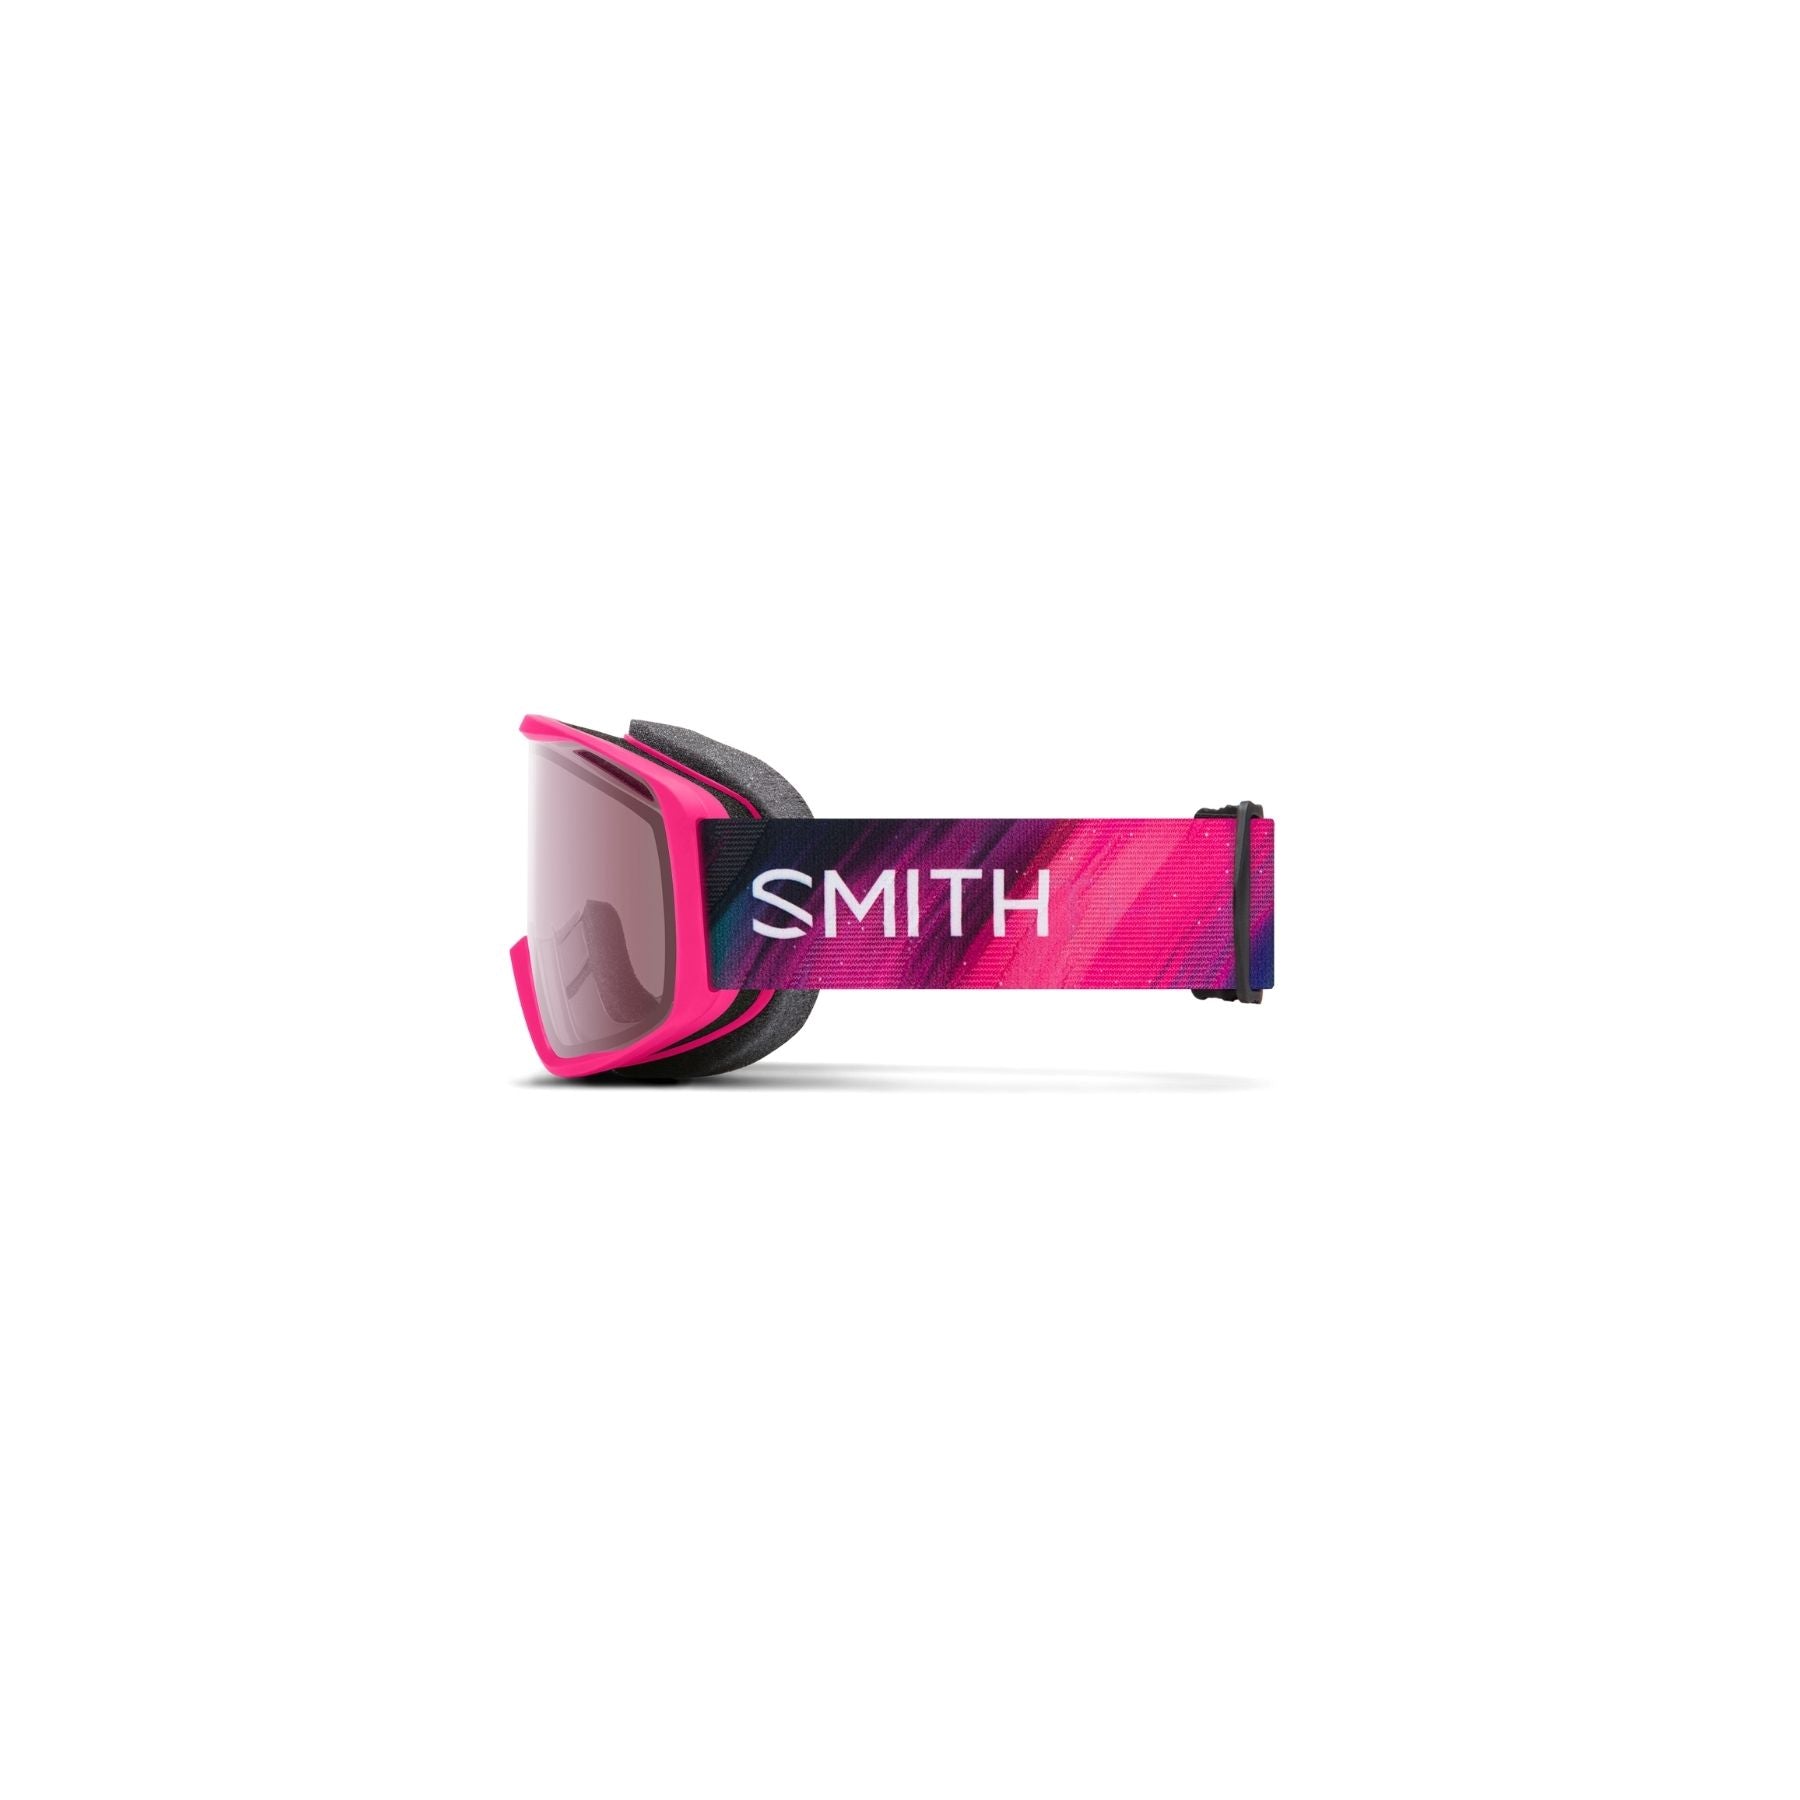 Smith Rally Goggles in Lectric Flamingo Supernova